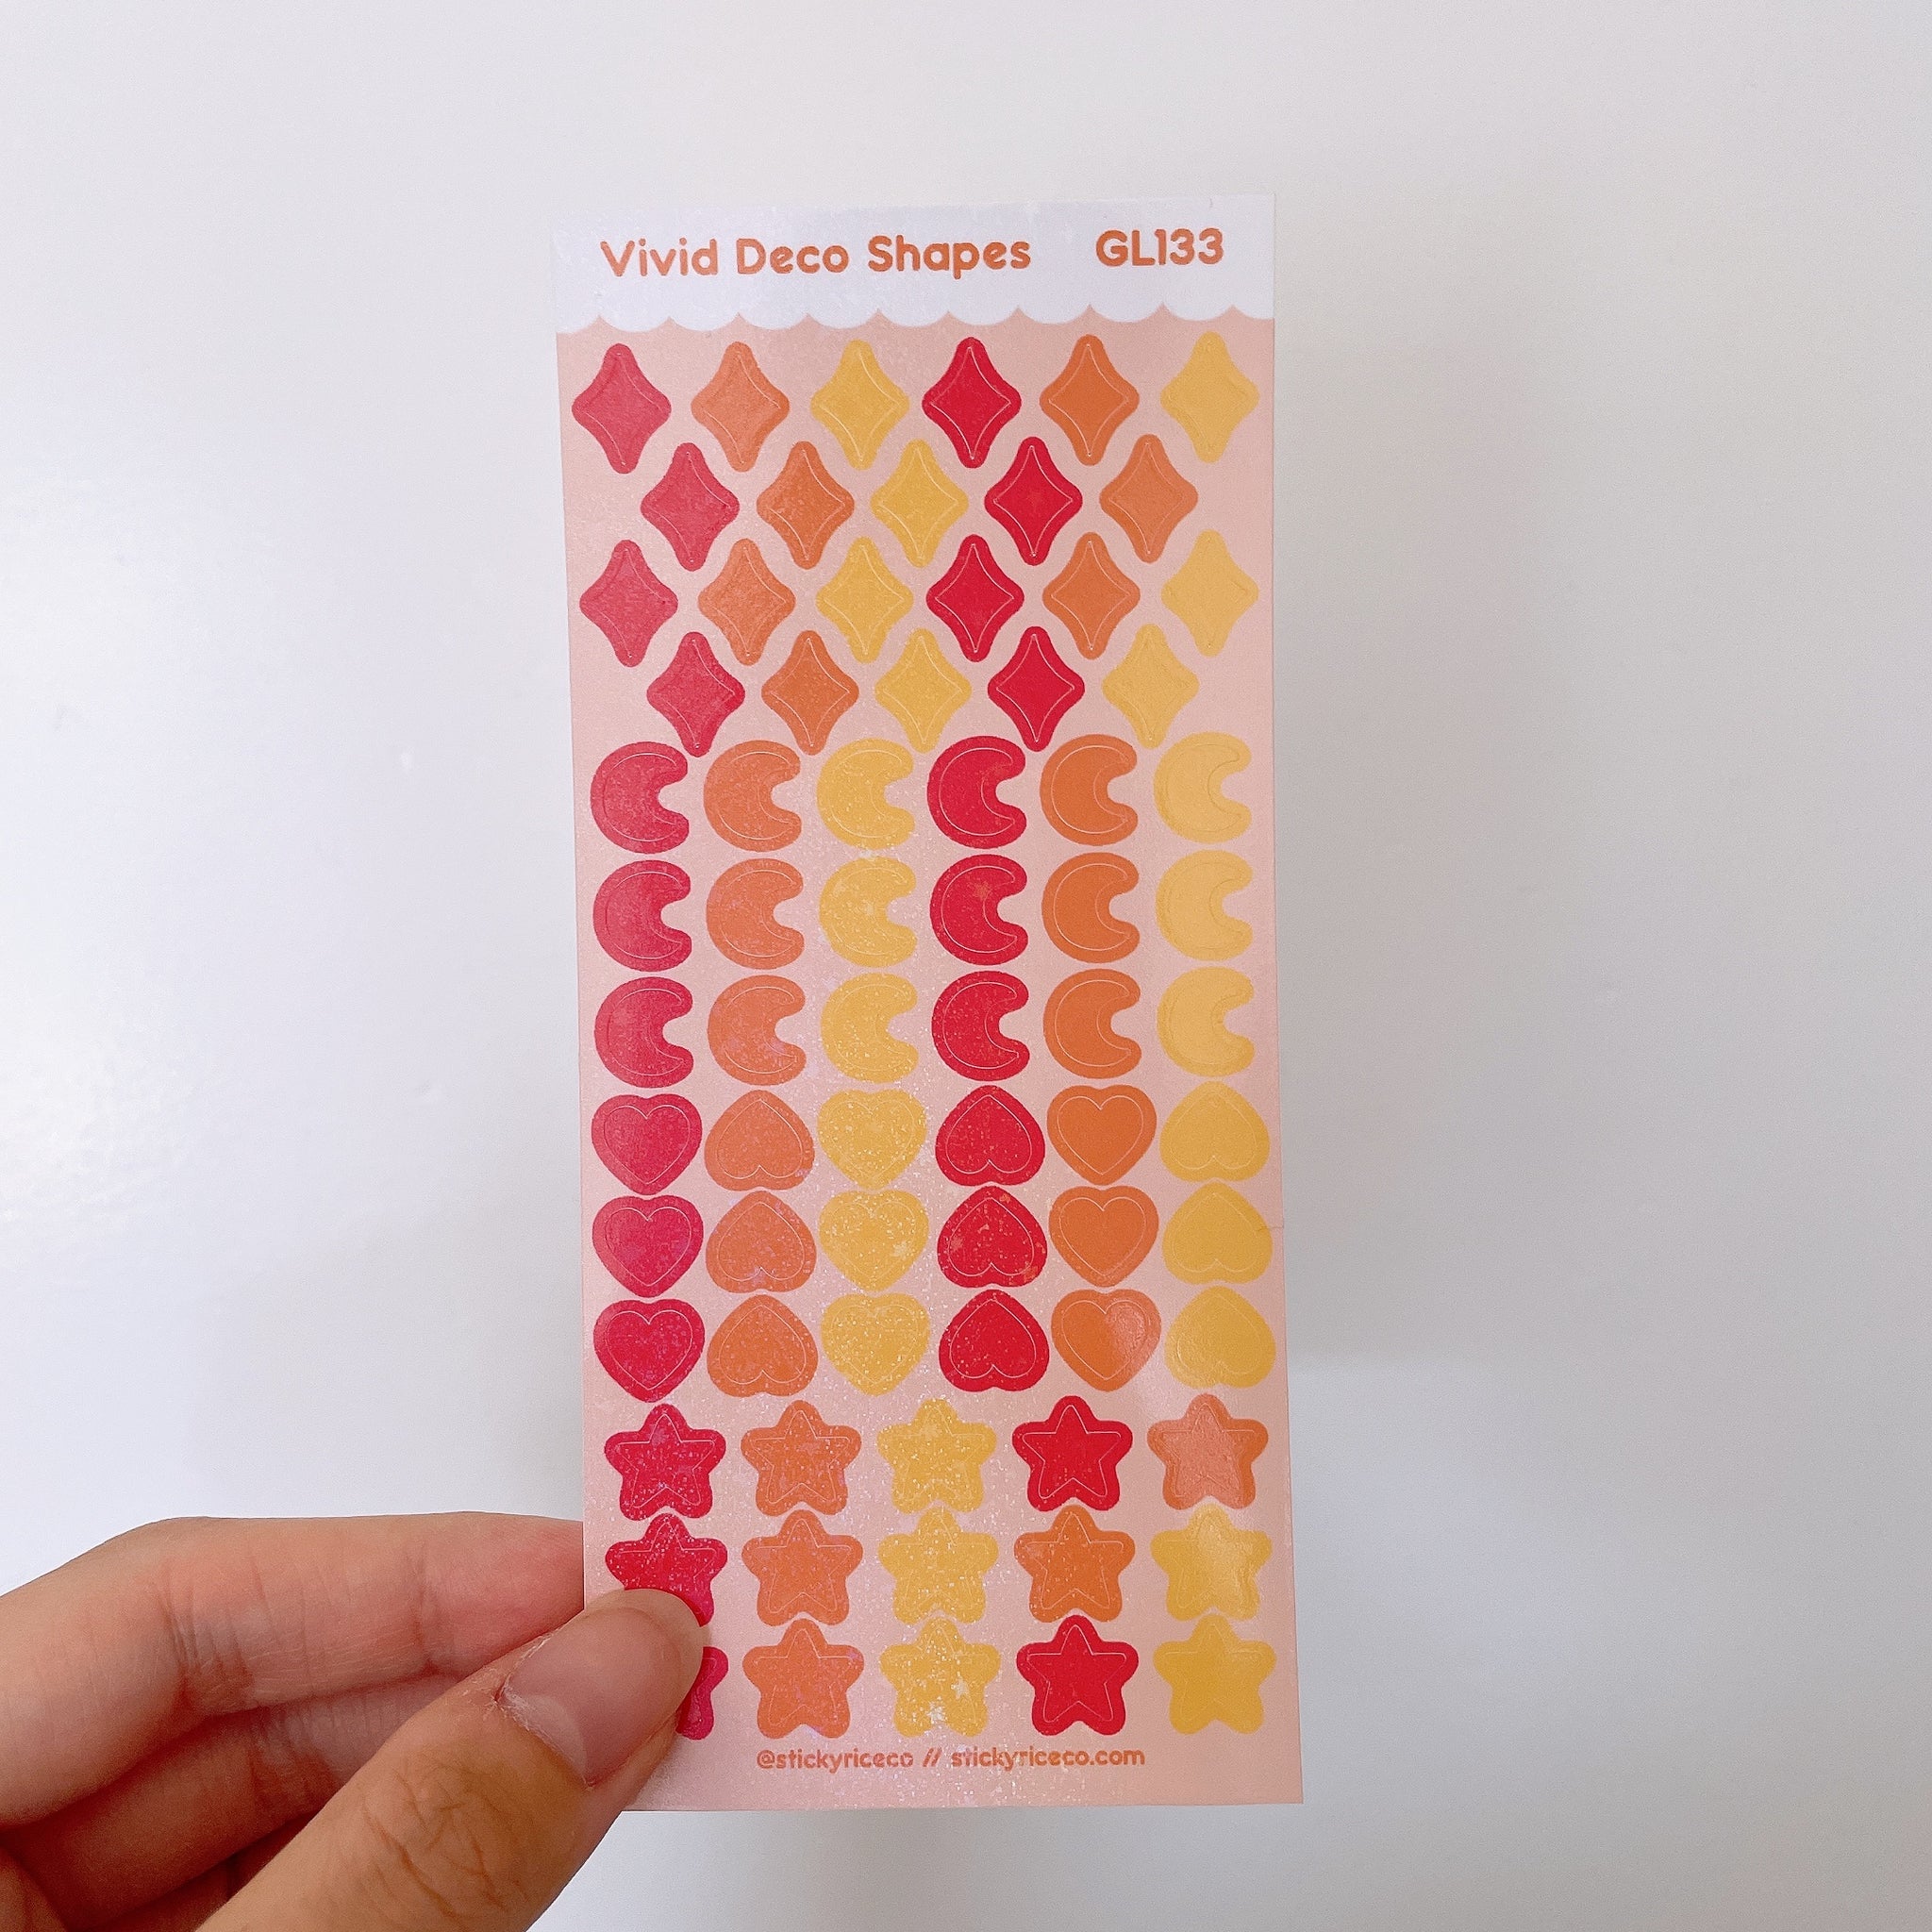 Vivid Colorful Polco Deco Shapes V2 Holographic Glitter Vinyl Deco Stickers